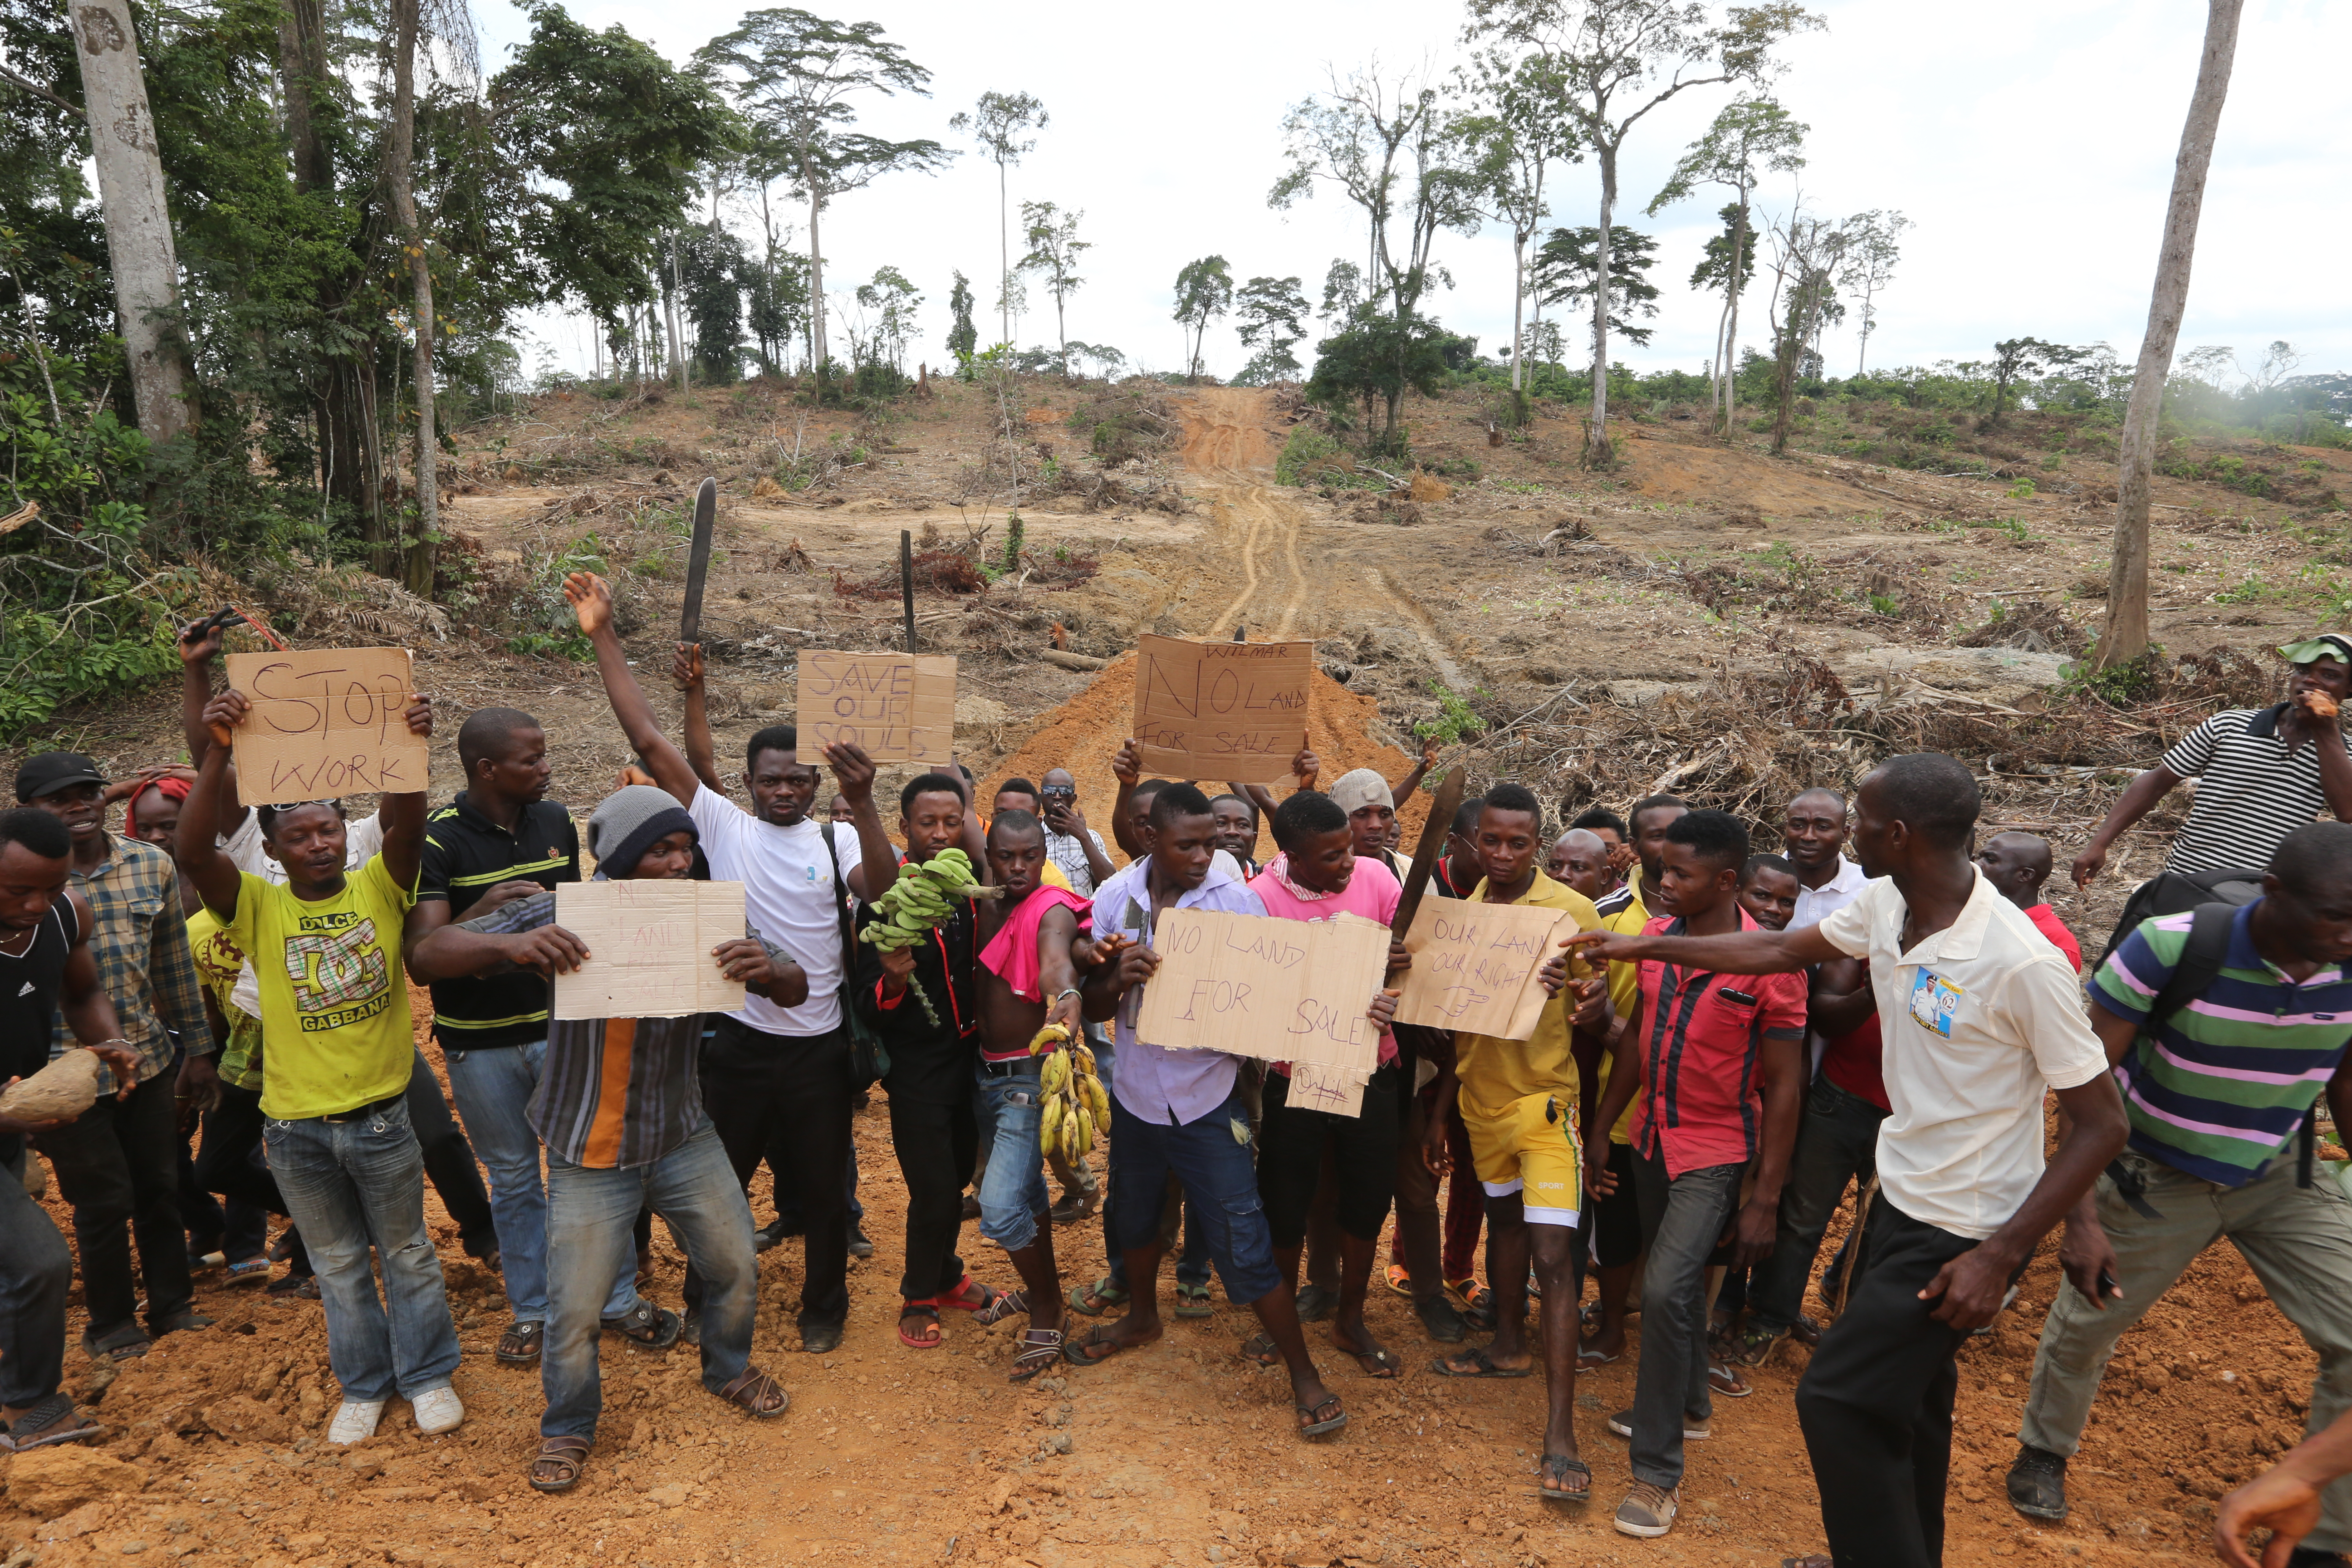 Communities in Nigeria speak out on Wilmar palm oil landgrab: Video and statement